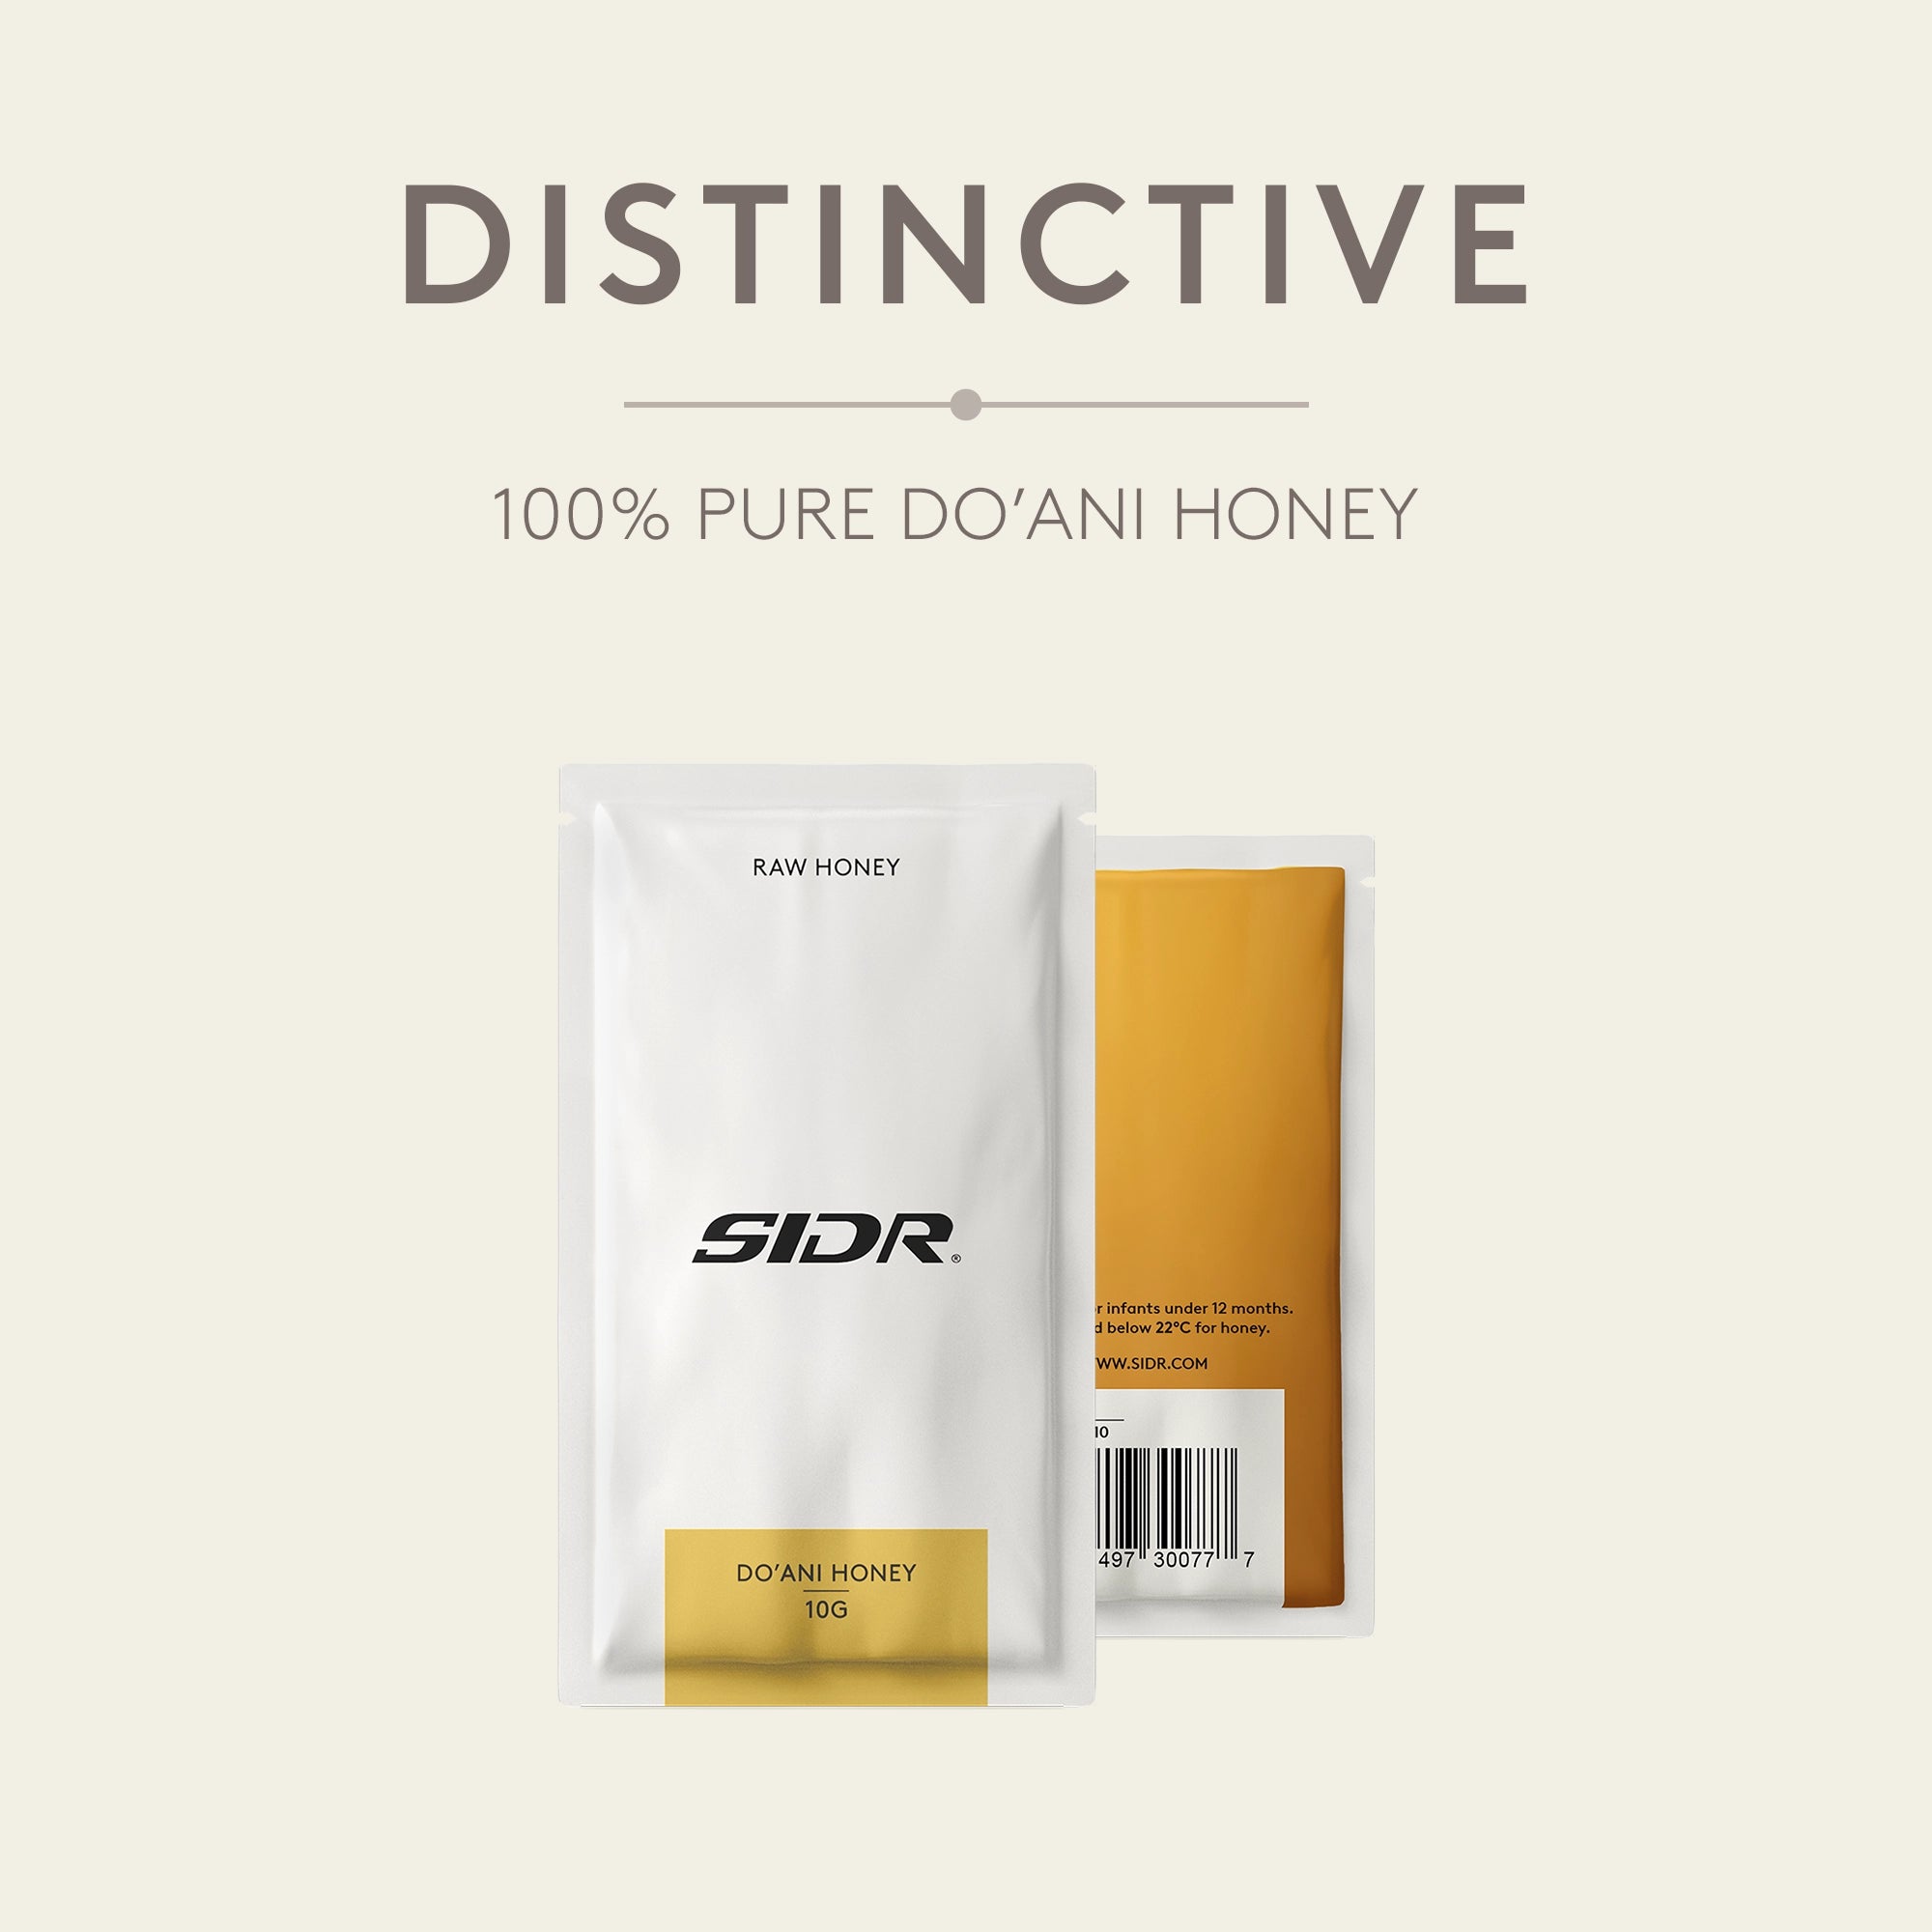 sidr doani honey packet distinctive